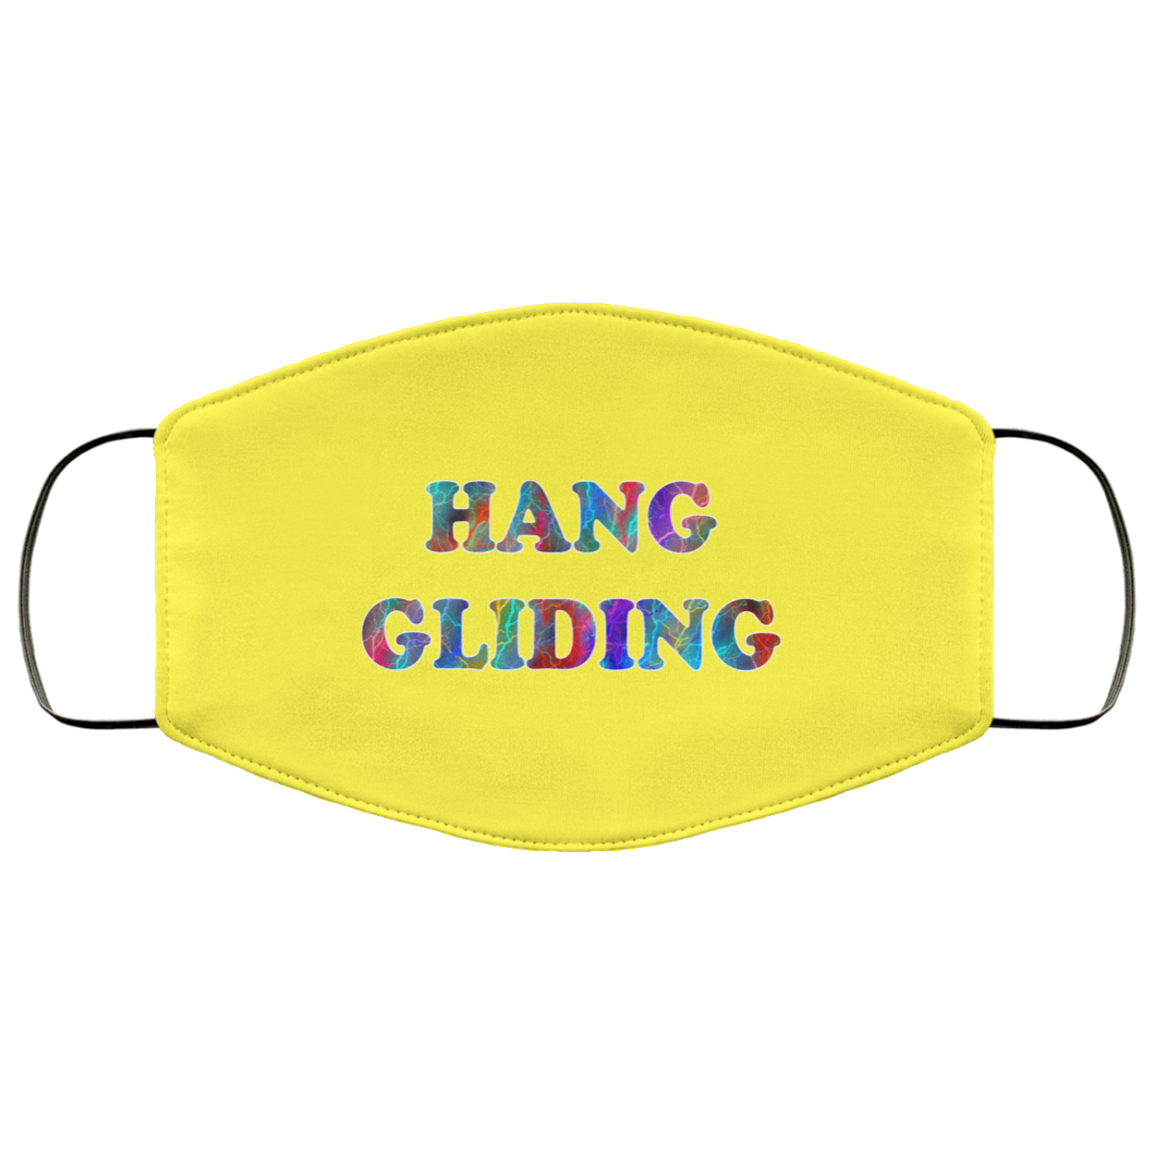 Hang Gliding 2 Layer Protective Mask